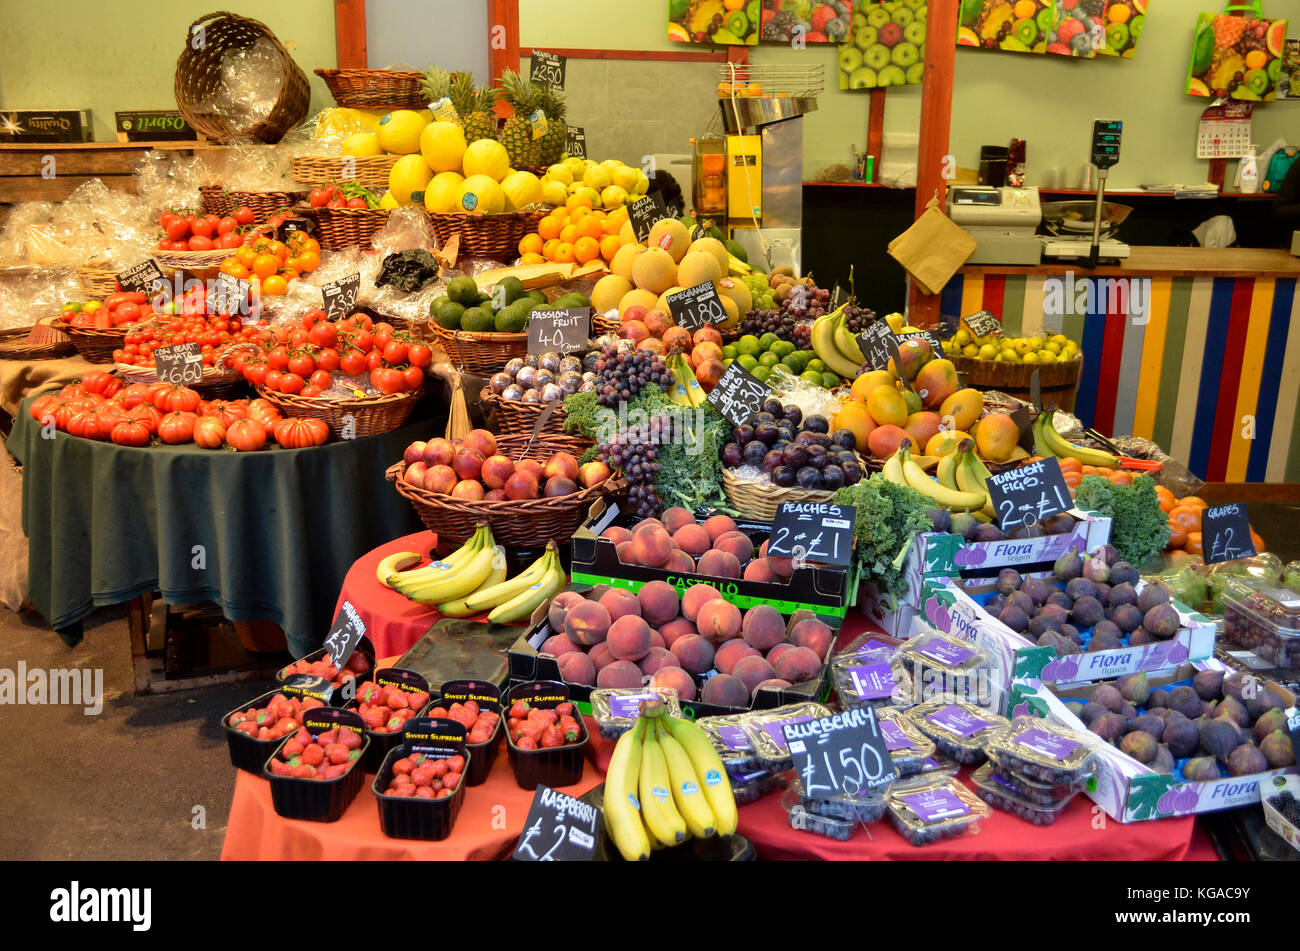 Fruit & Veg, Borough Market, London, UK. Stock Photo